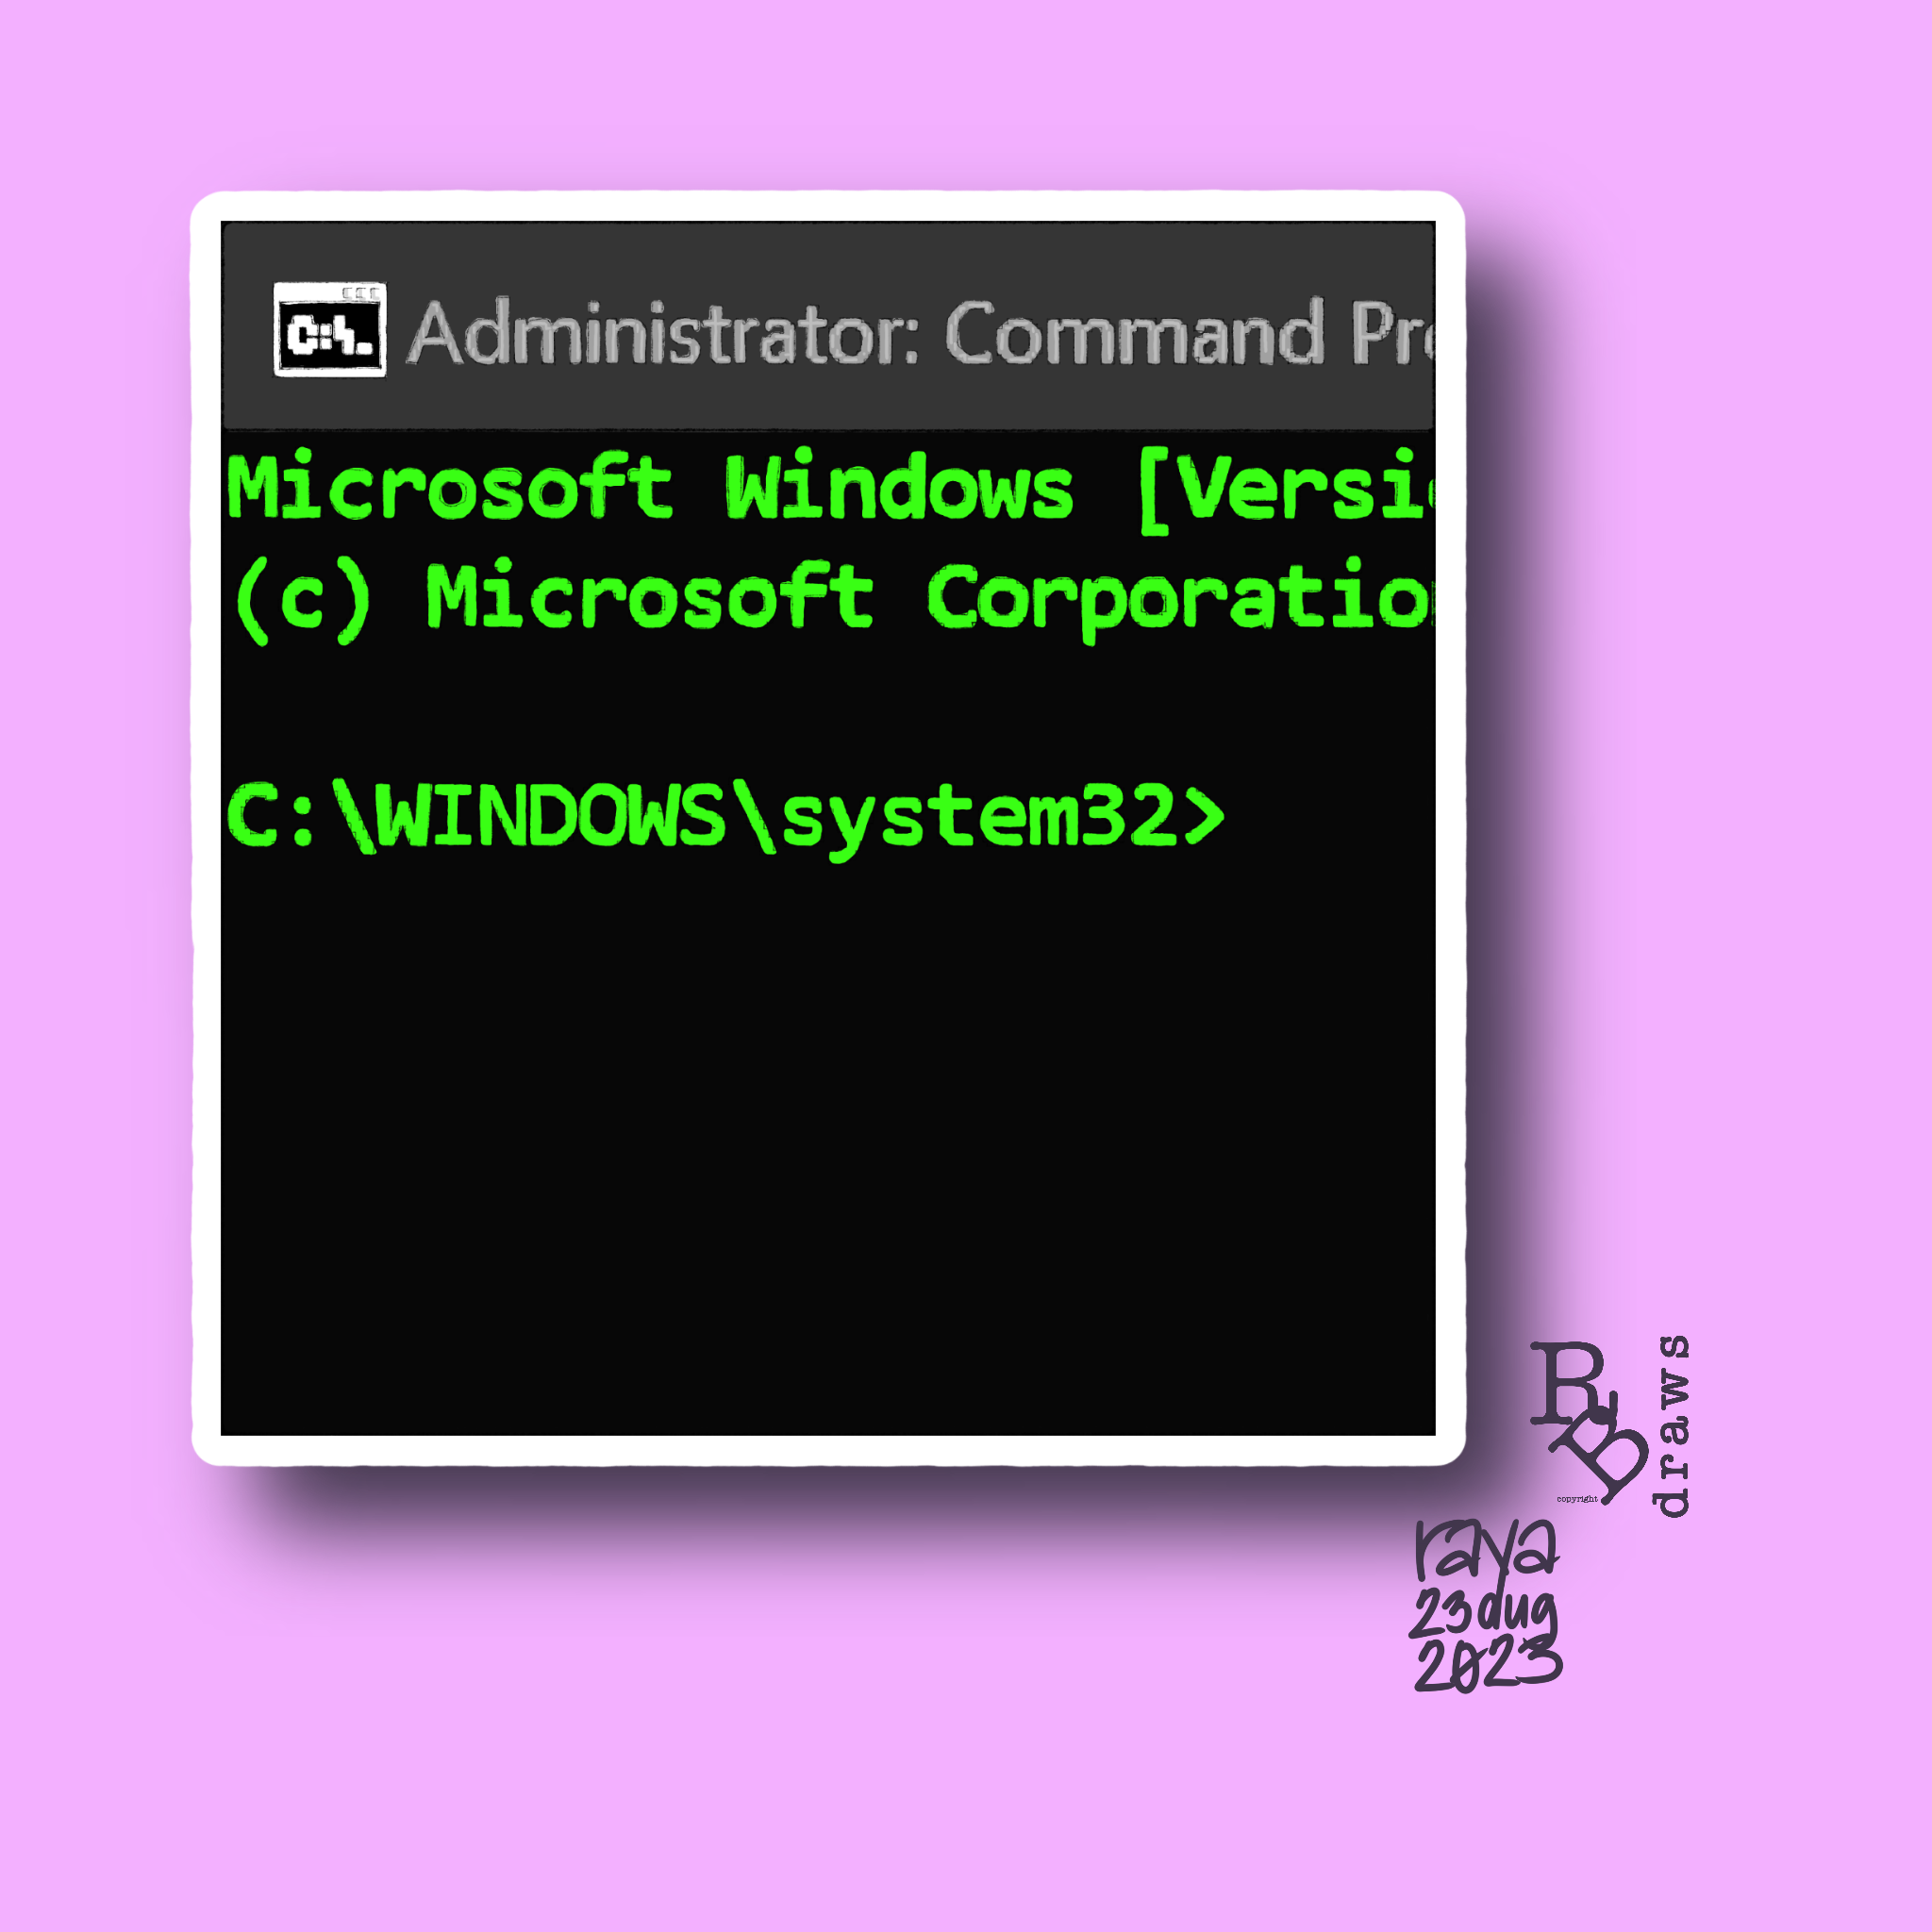 Illustration of Command Prompt Admin window